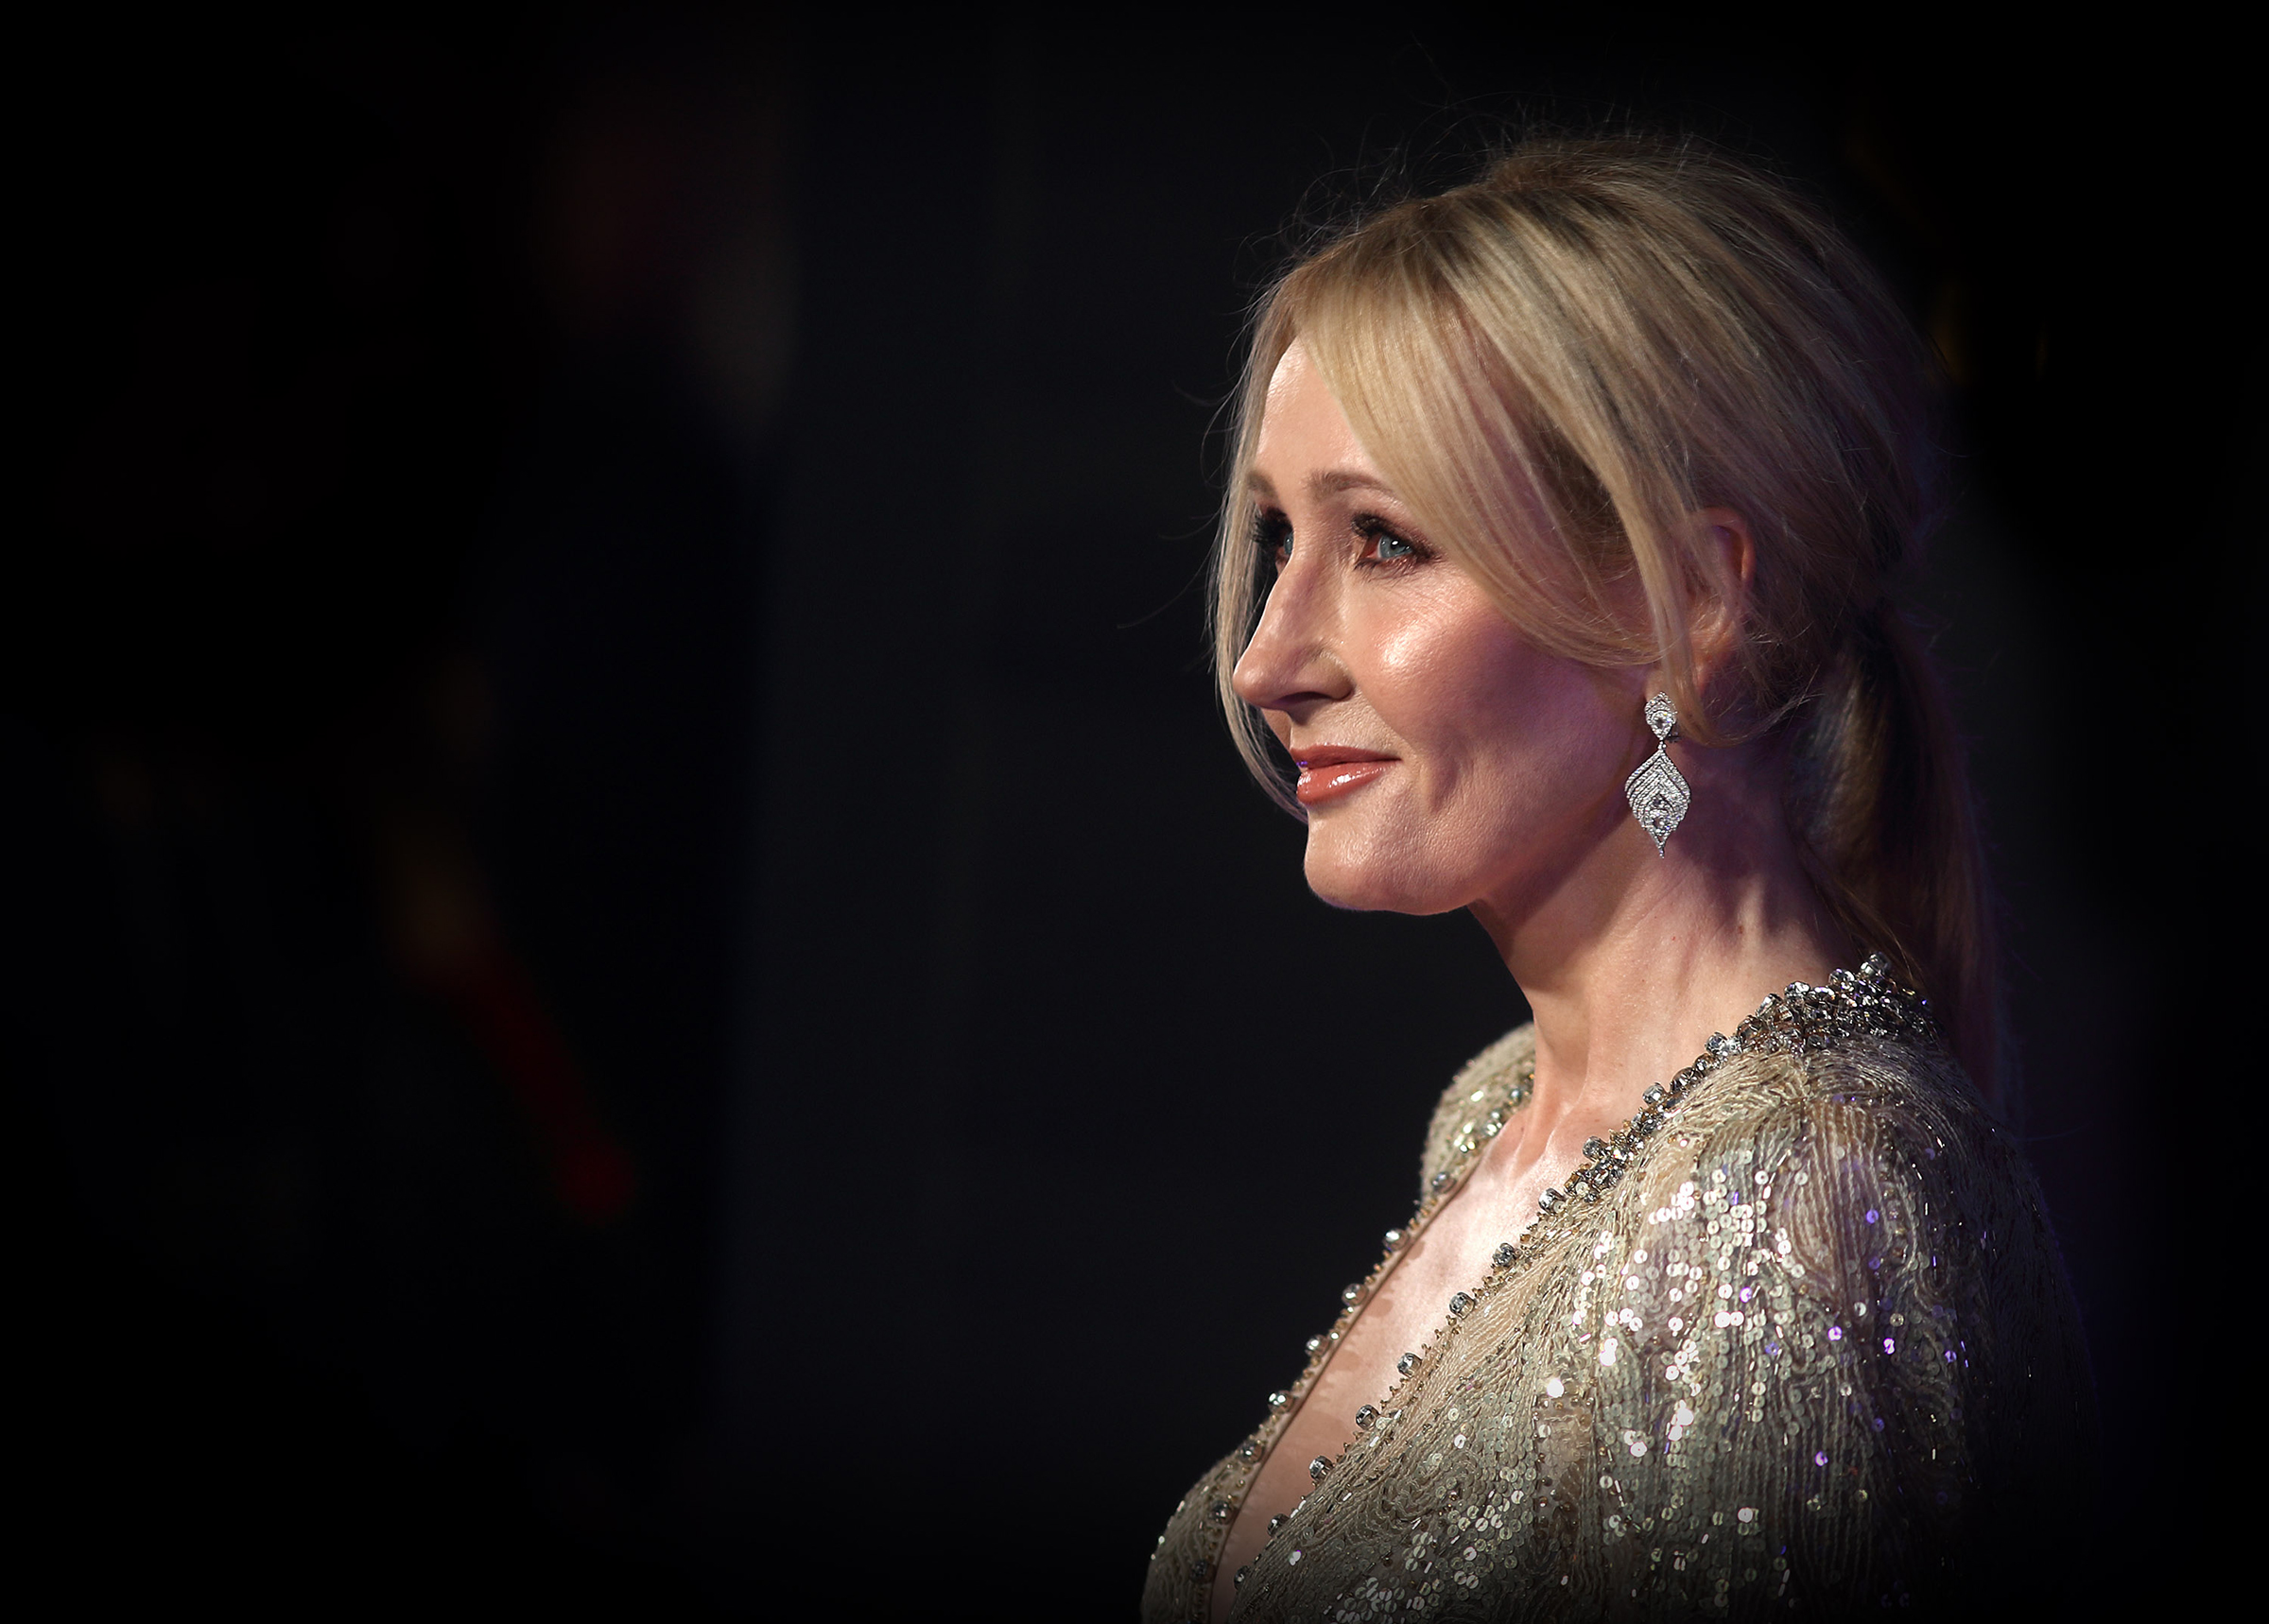 J.K. Rowling attends the European premiere of 